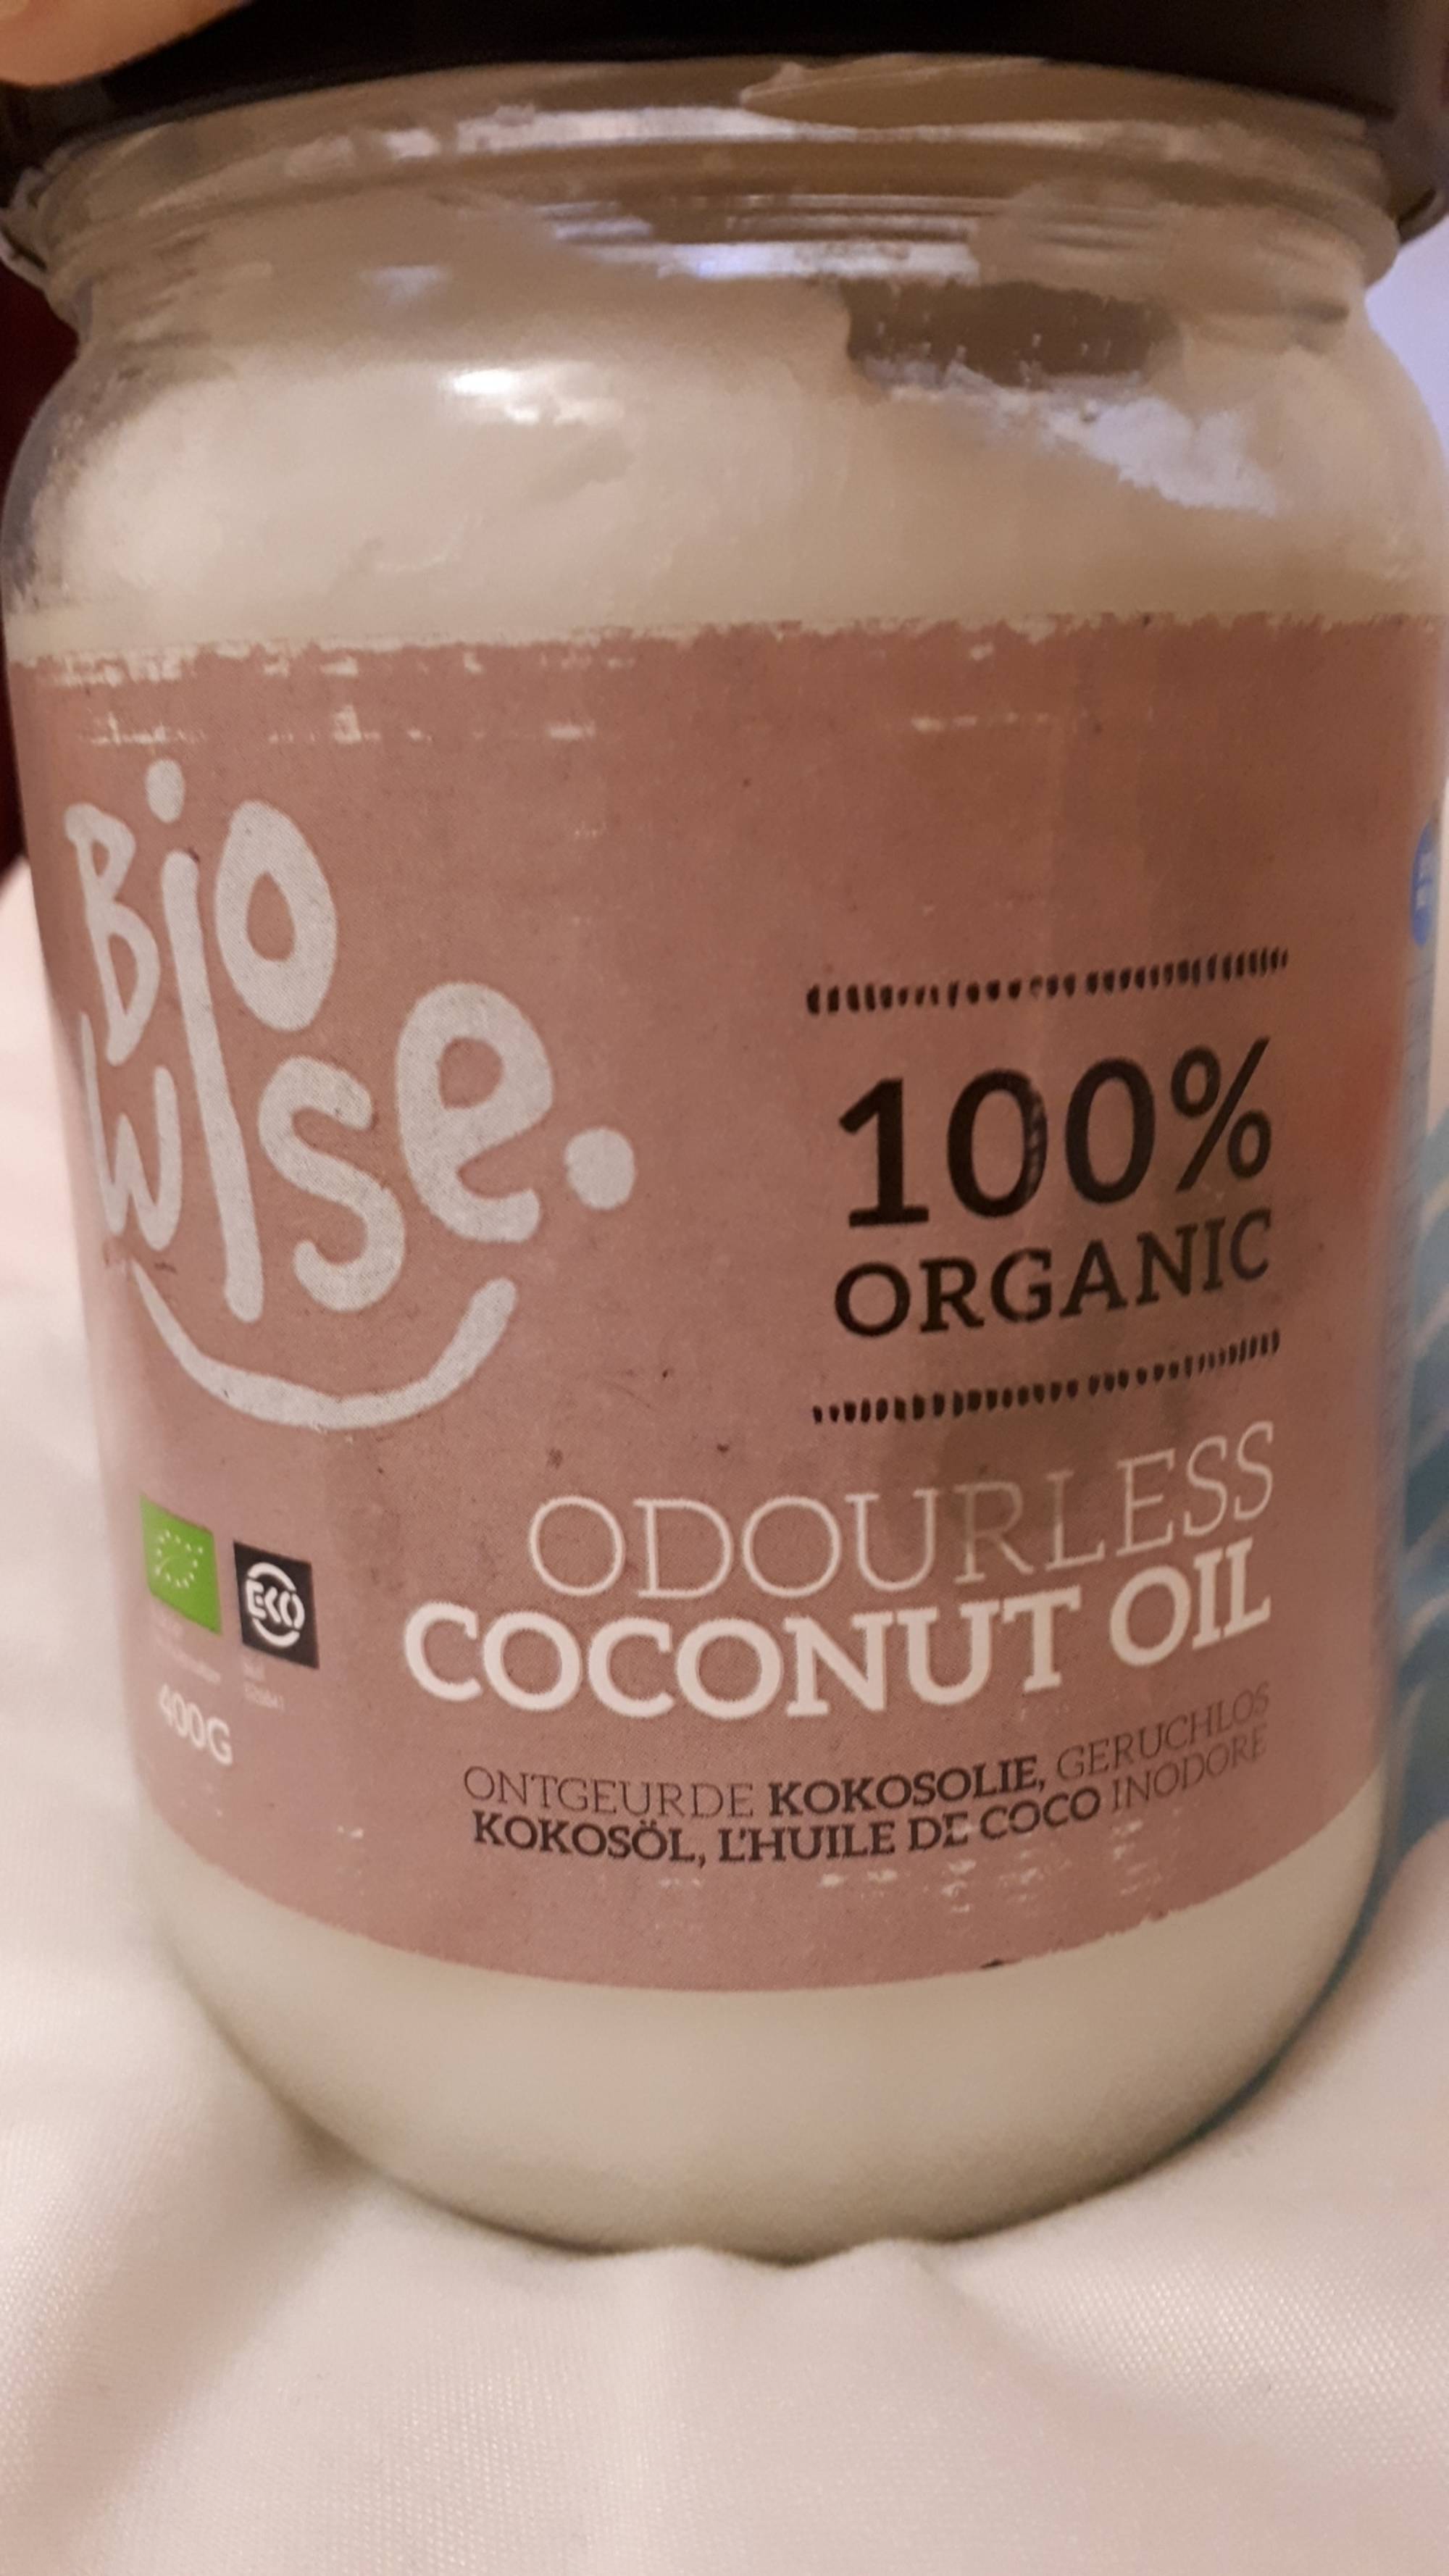 BIO WISE - Odourless - Coconut oil